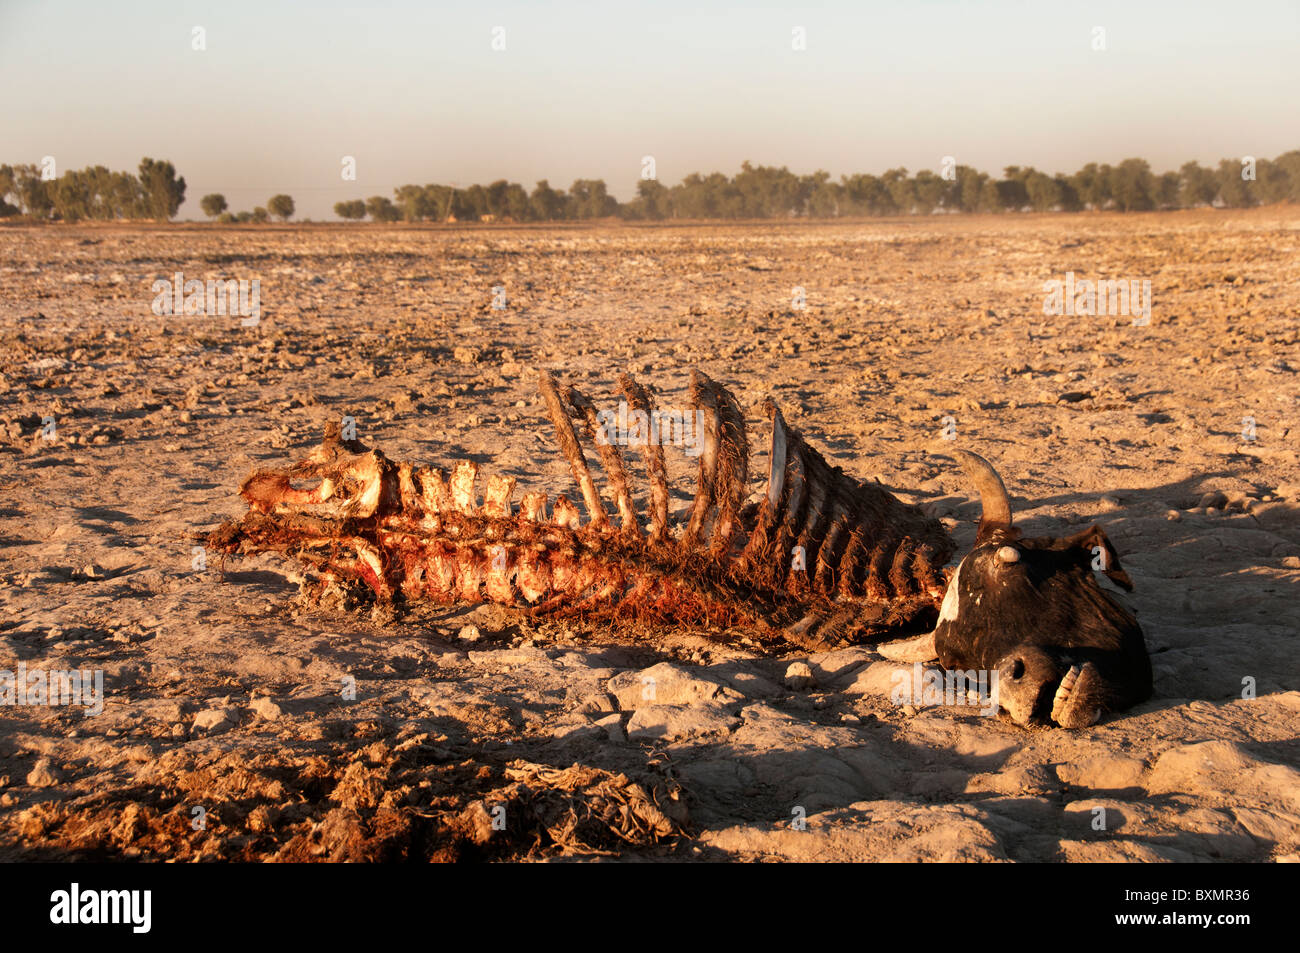 Pakistan Sindh Provinz Shaddat Kot. Nach der Flut. Dezember 2010. Kuh-Karkasse - Tausende Tiere ertrunken. Stockfoto